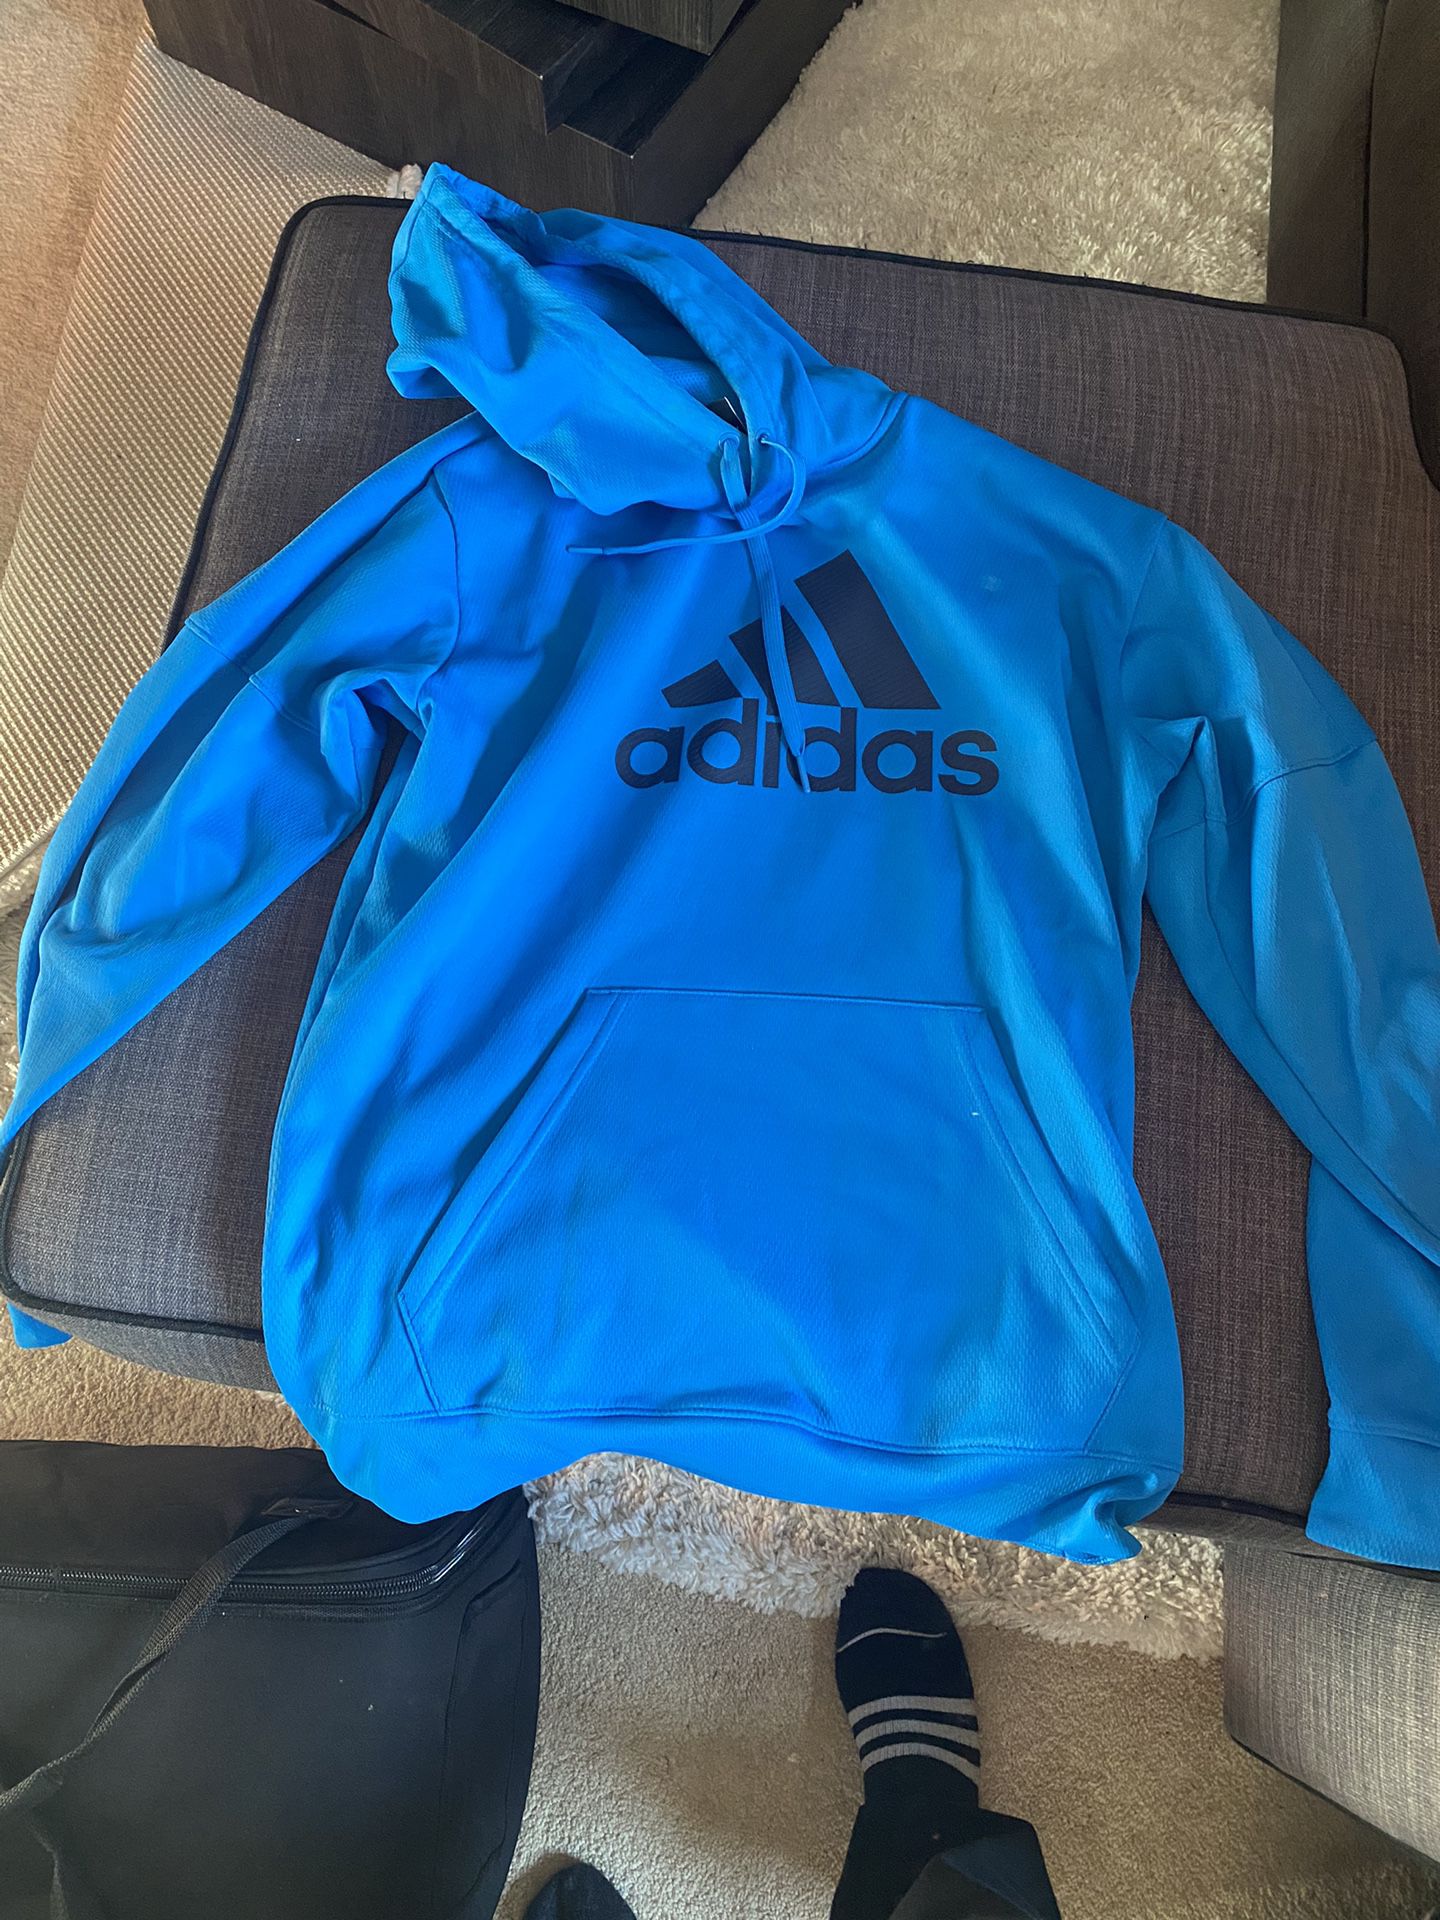 Adidas blue hoody size medium 